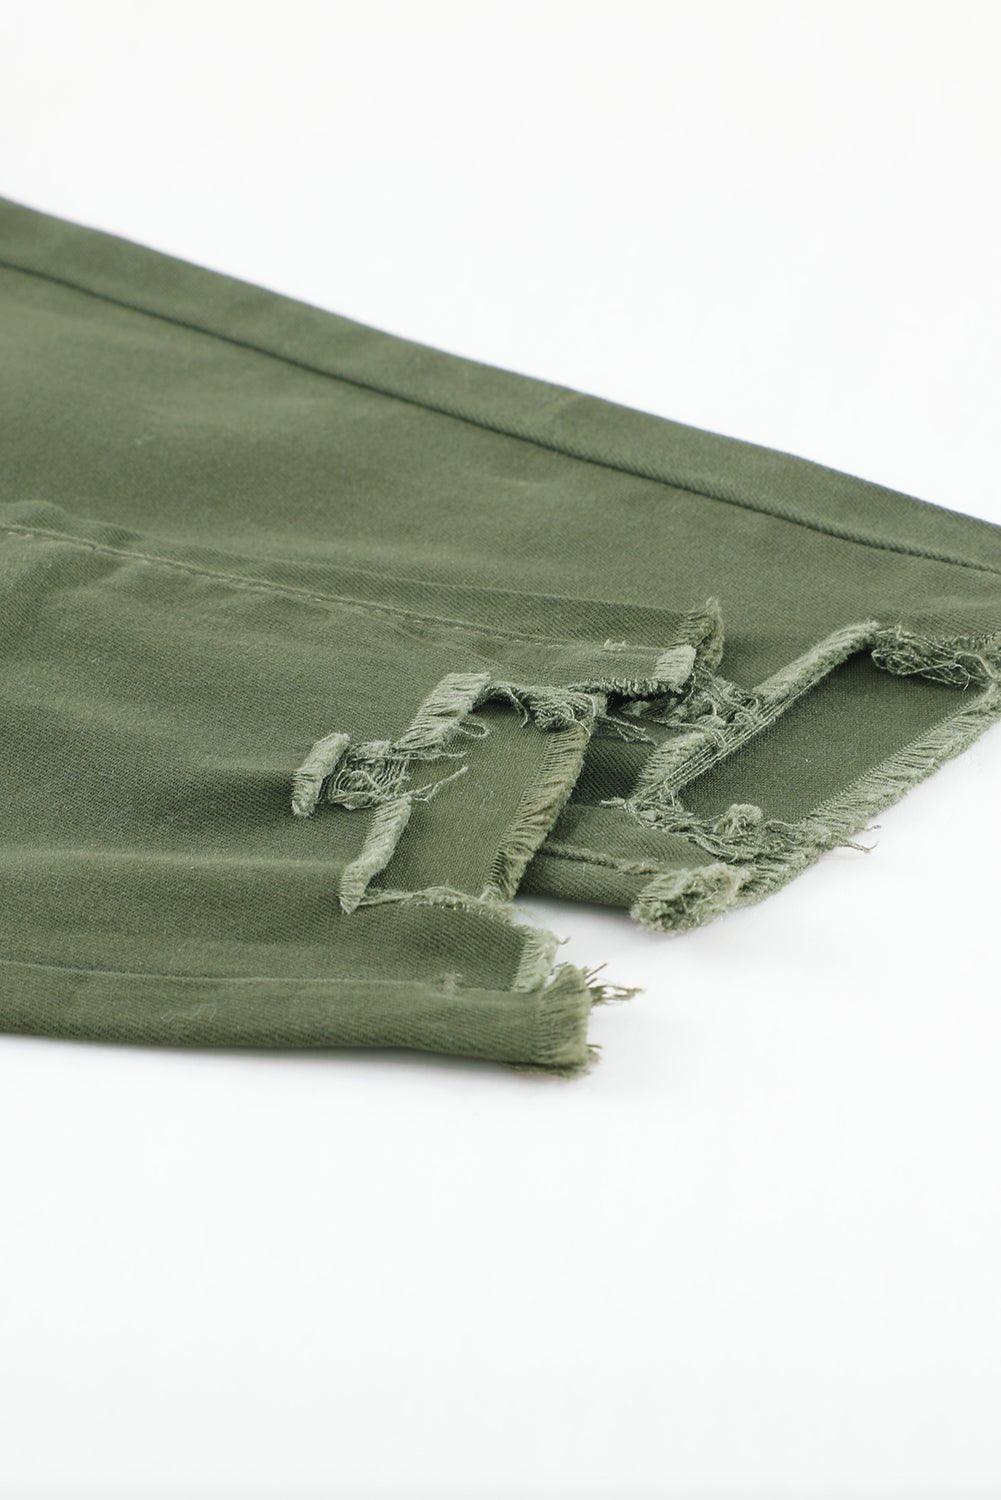 Sage Green Frayed Denim Jeans - Klazzi Fashion Boutique